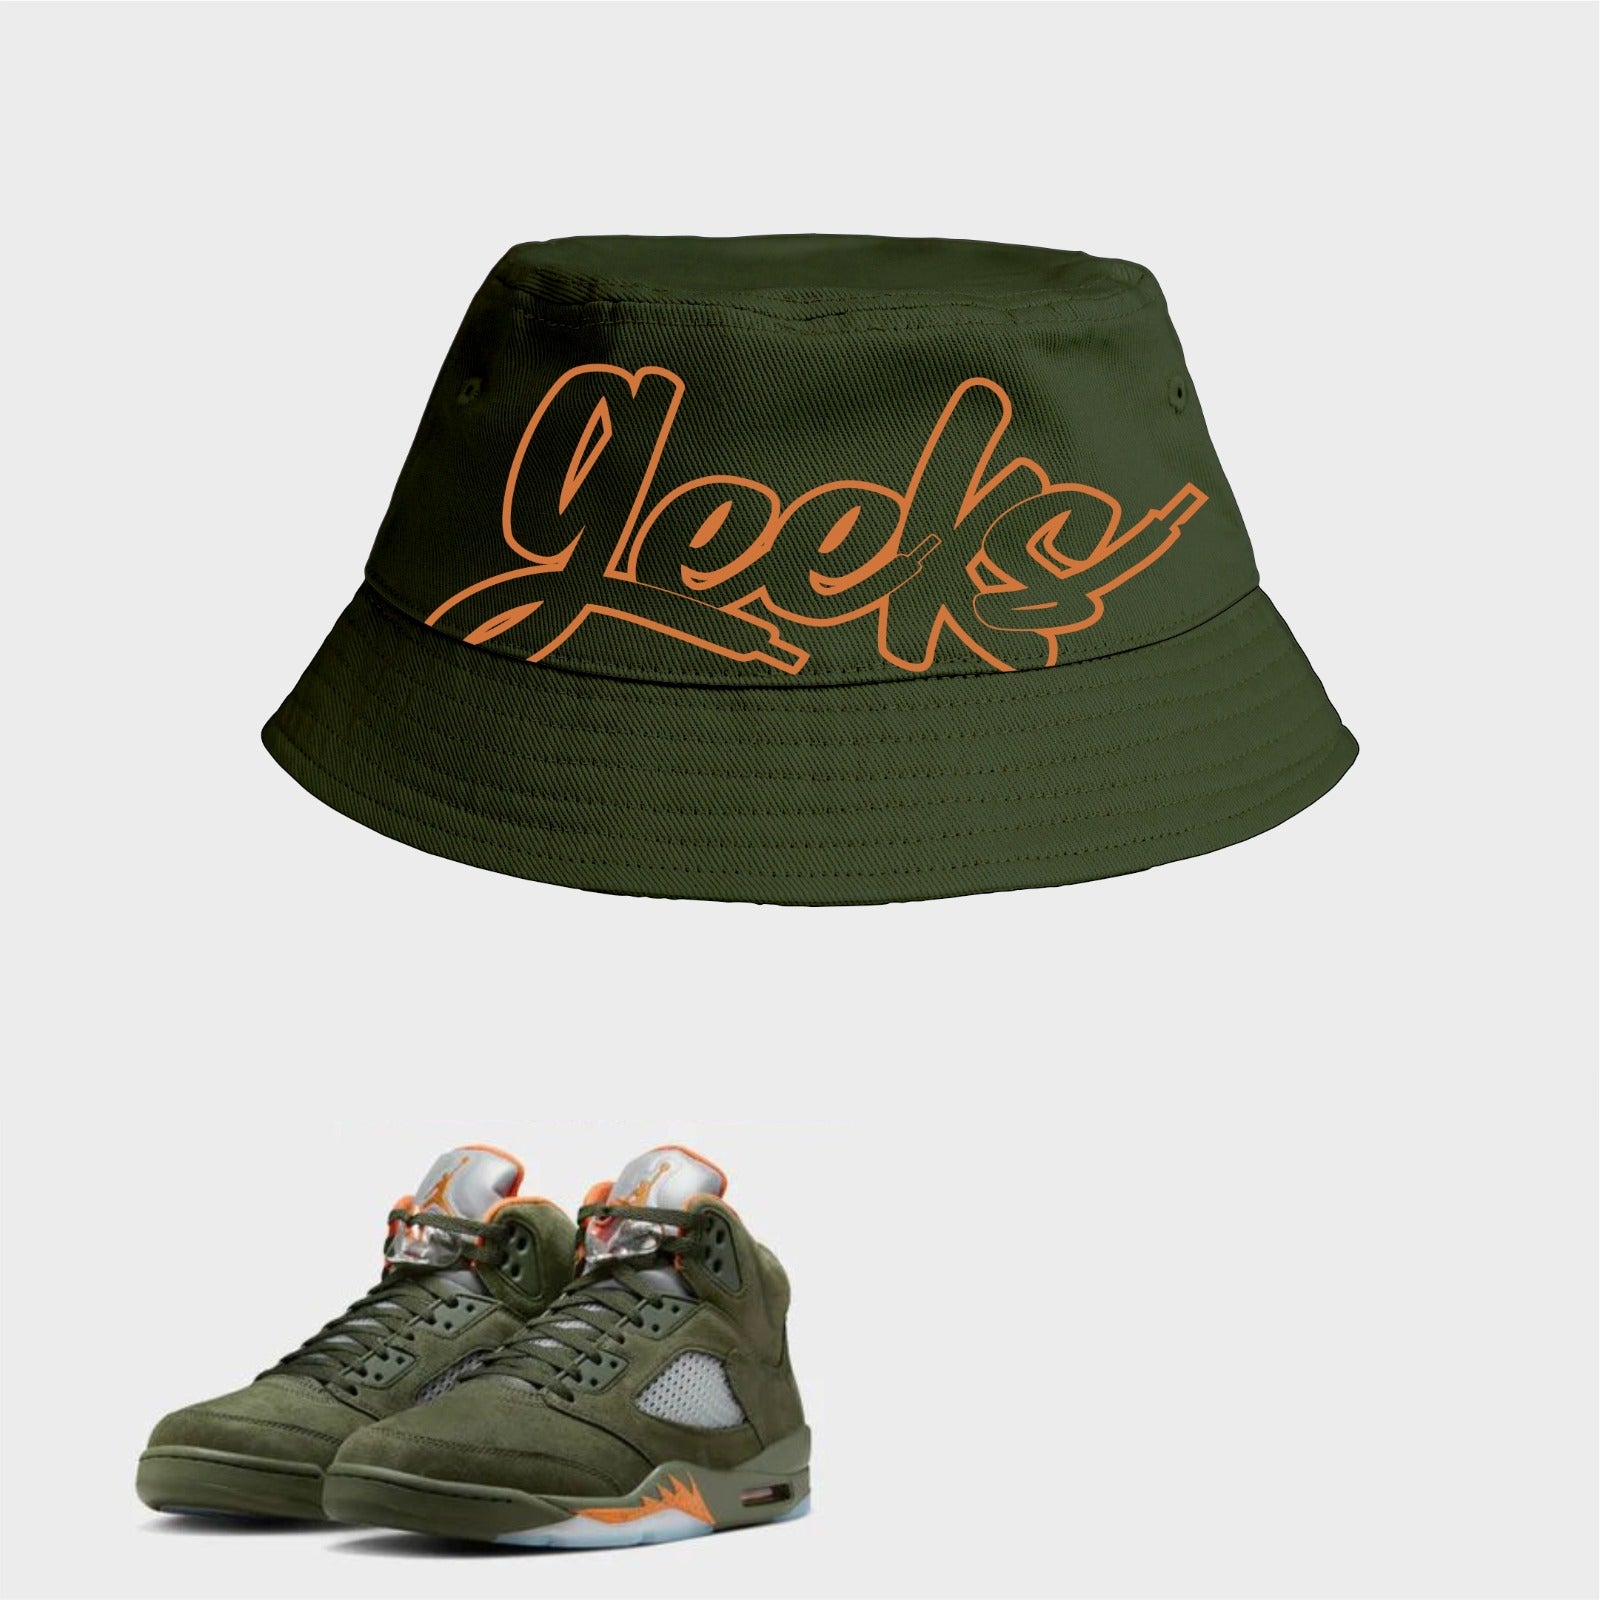 GEEKS Bucket Hat to match Retro Jordan 5 Olive sneakers